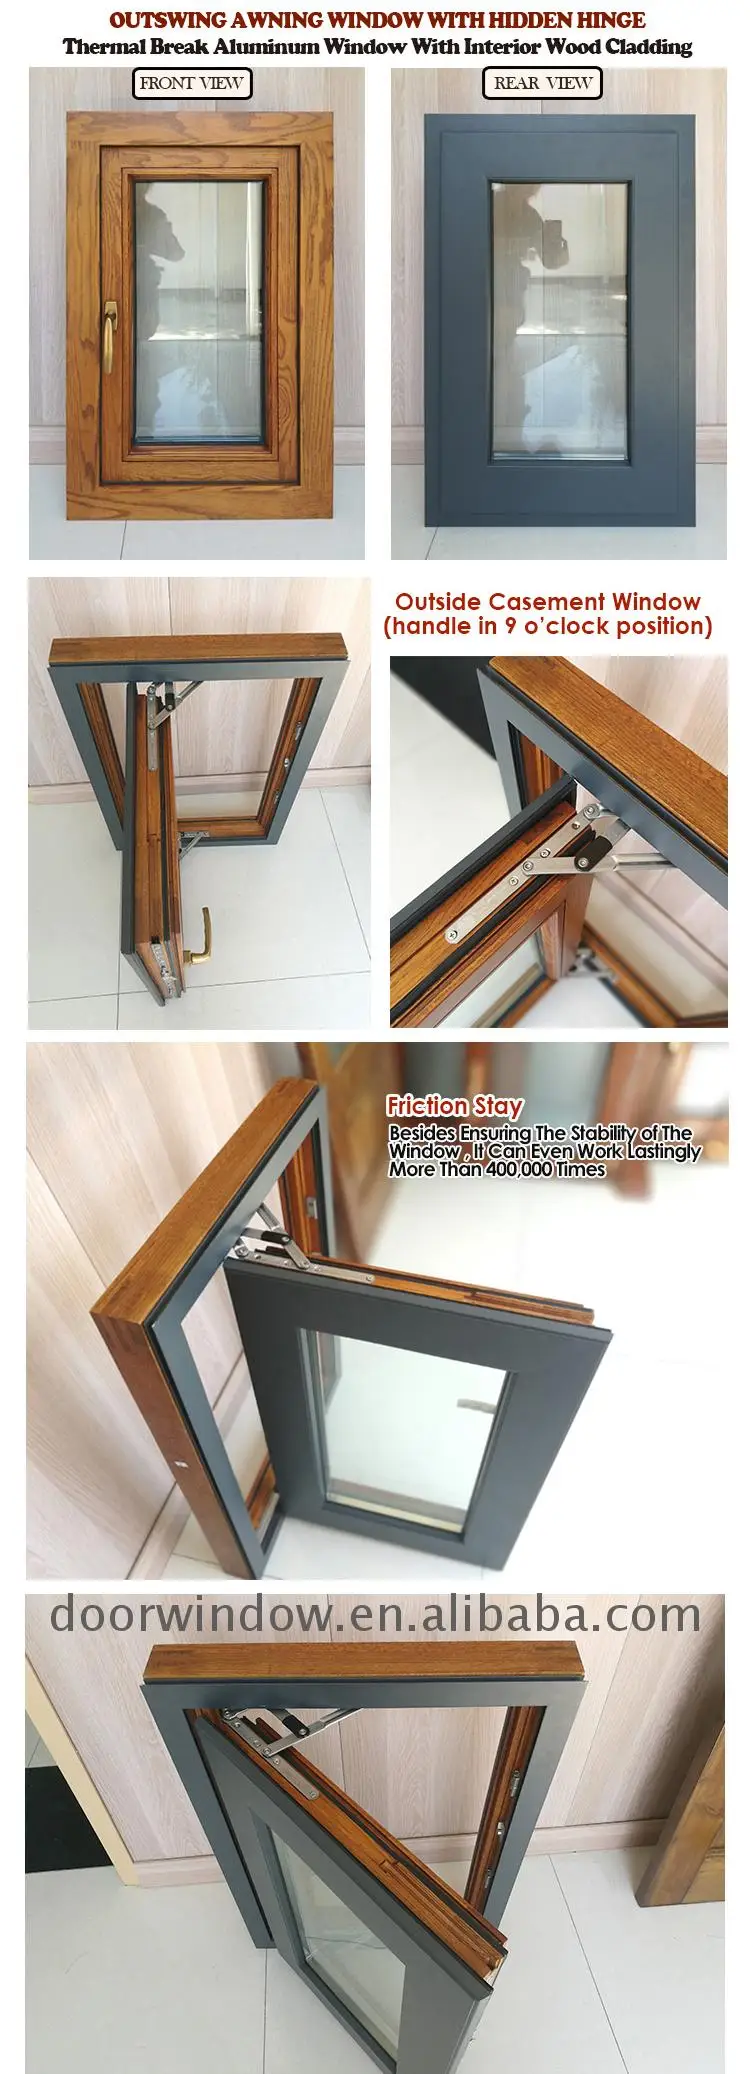 Hot new products italian style wood windows german casement